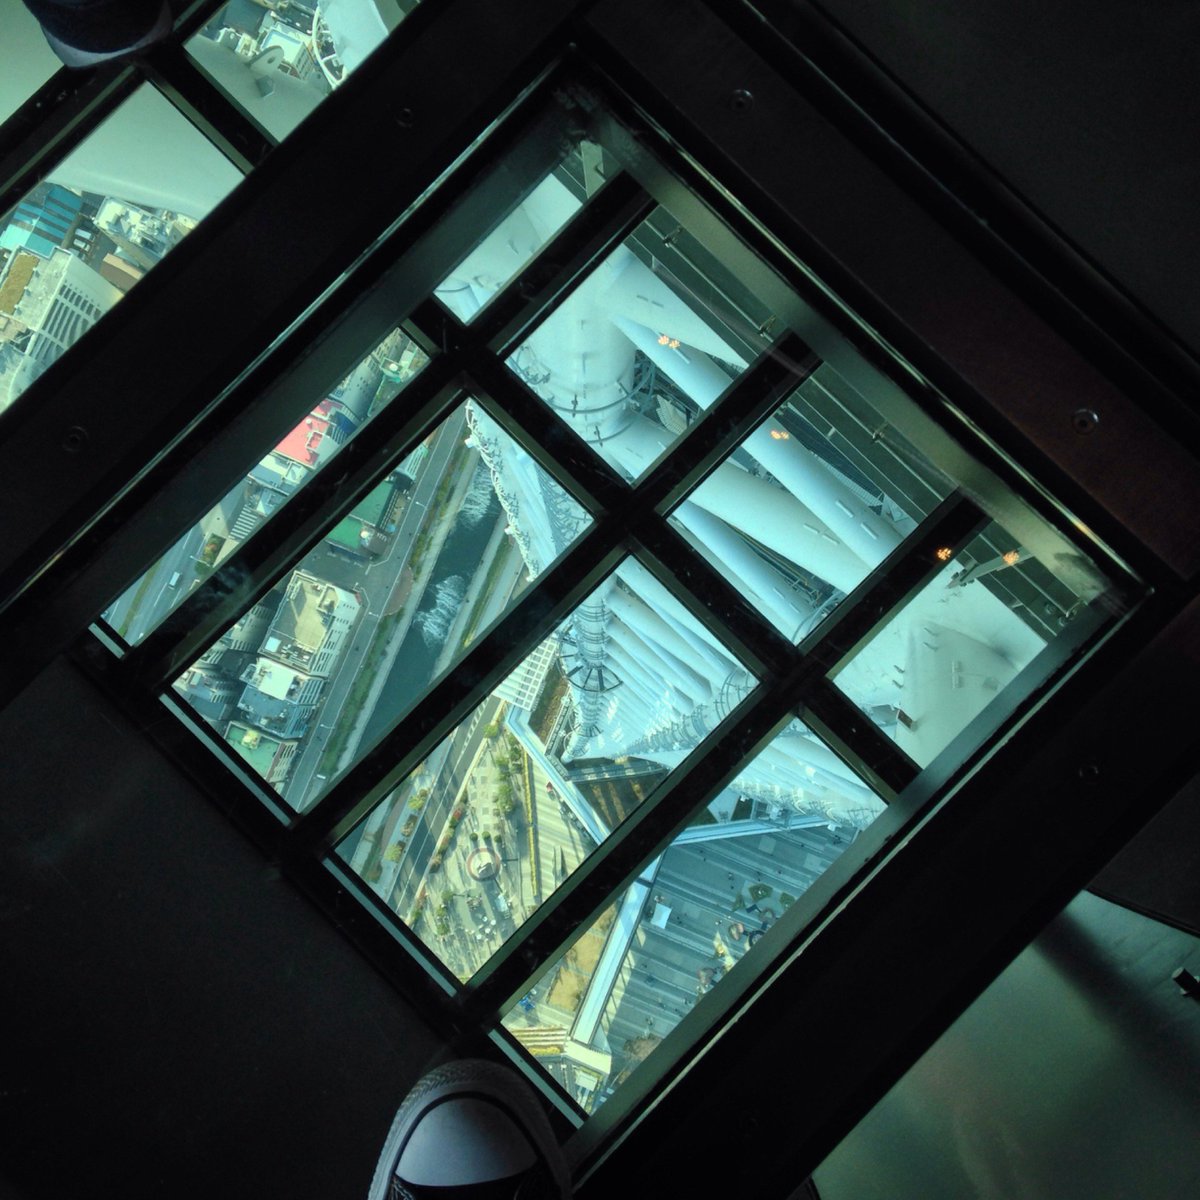 Uru A Twitter 東京スカイツリー 天望デッキ フロア340のガラス床